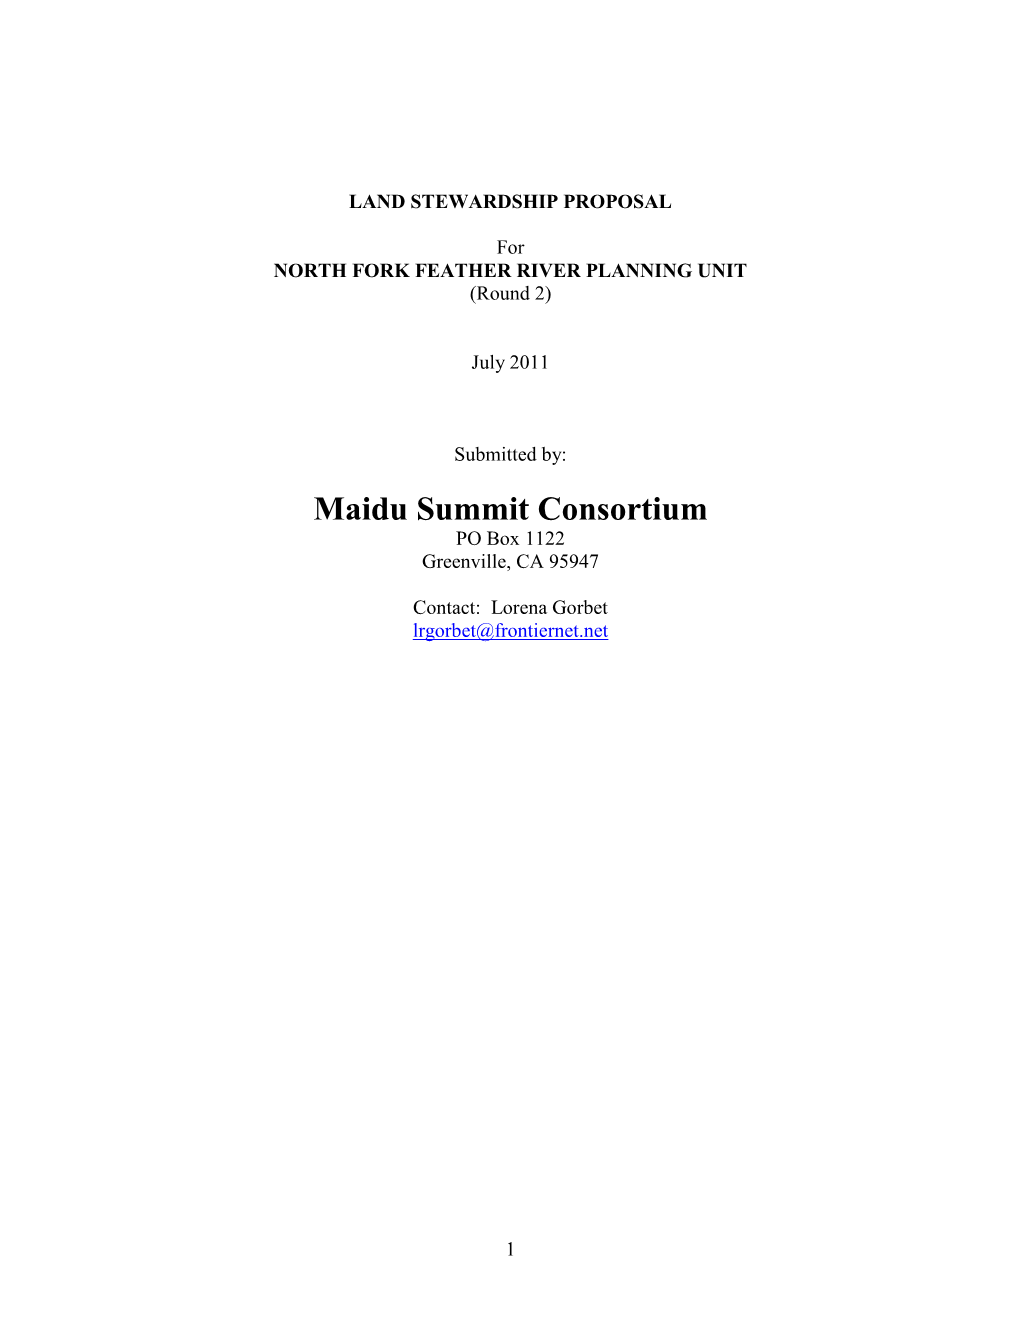 Land Stewardship Proposal from the Maidu Summit Consortium